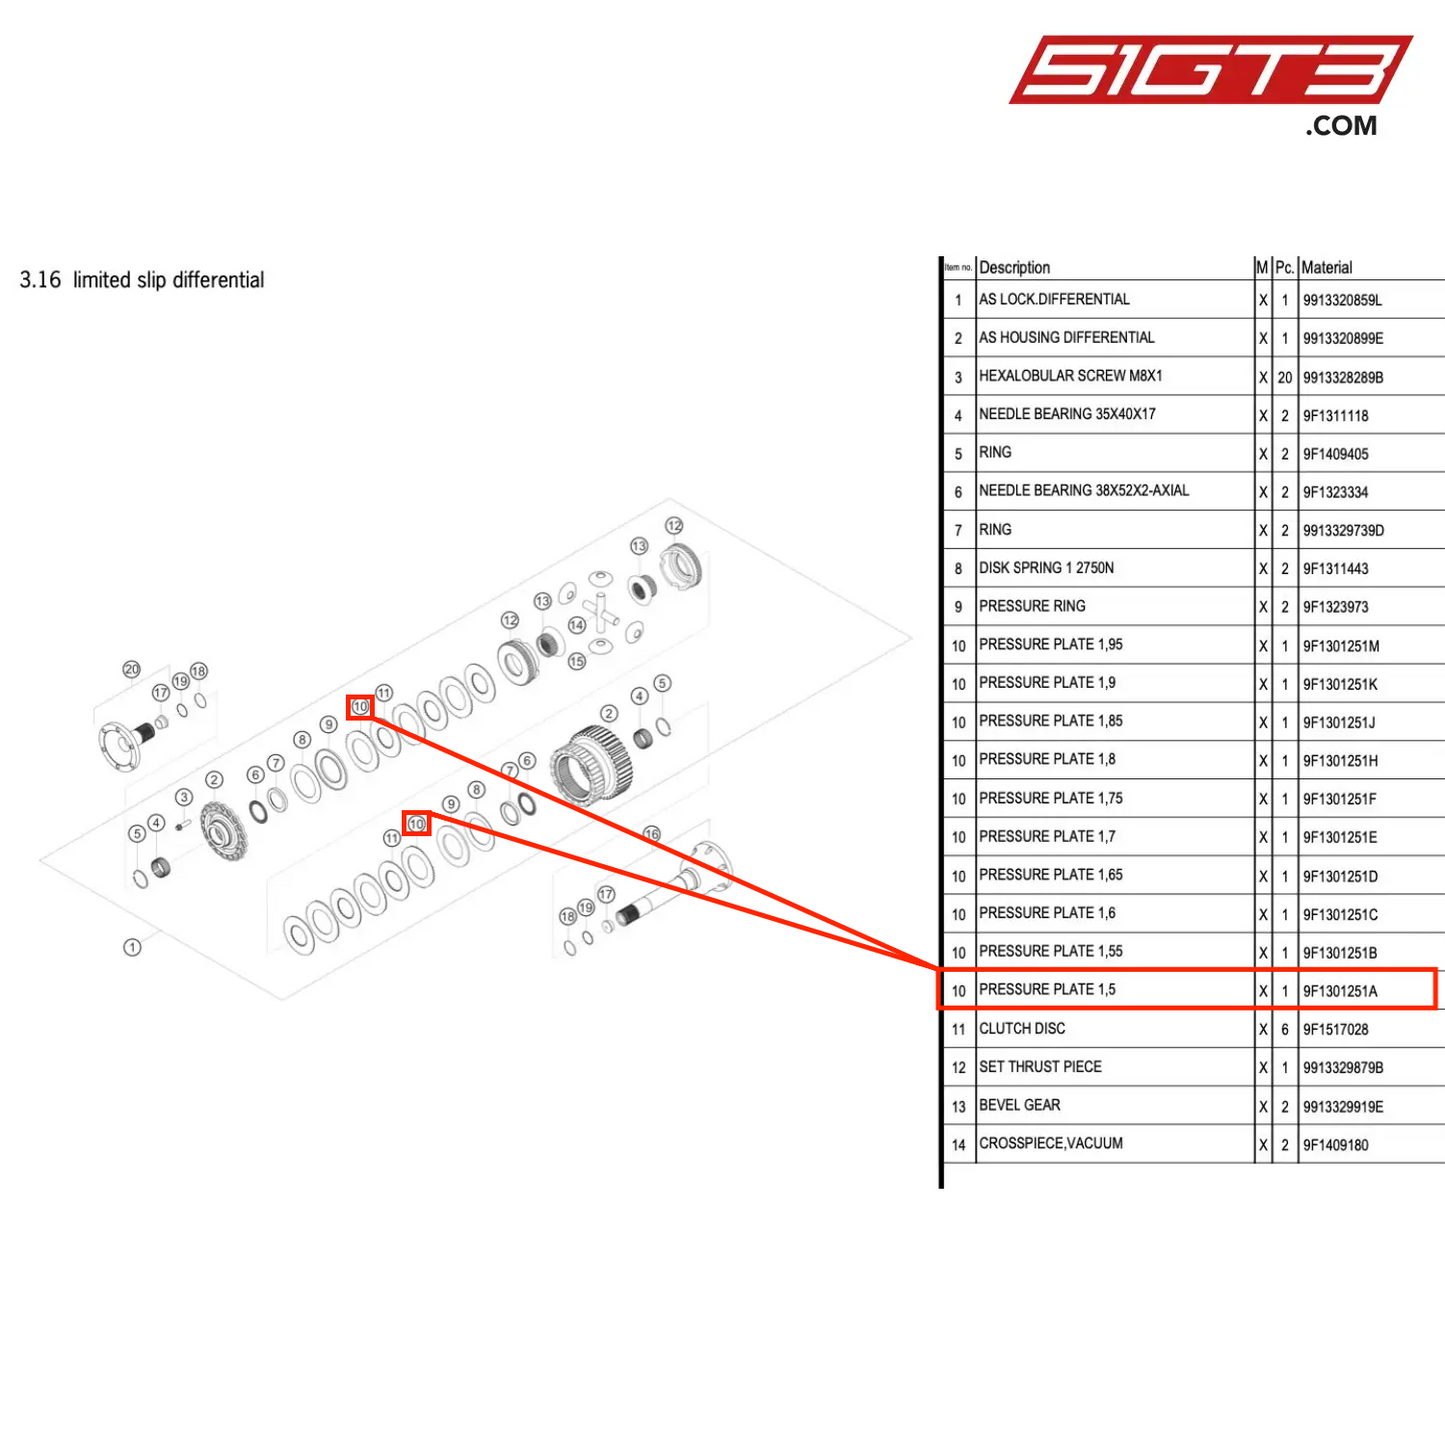 PRESSURE PLATE 1,5 - 9F1301251A [PORSCHE 911 GT3 Cup Type 991 (GEN1)]